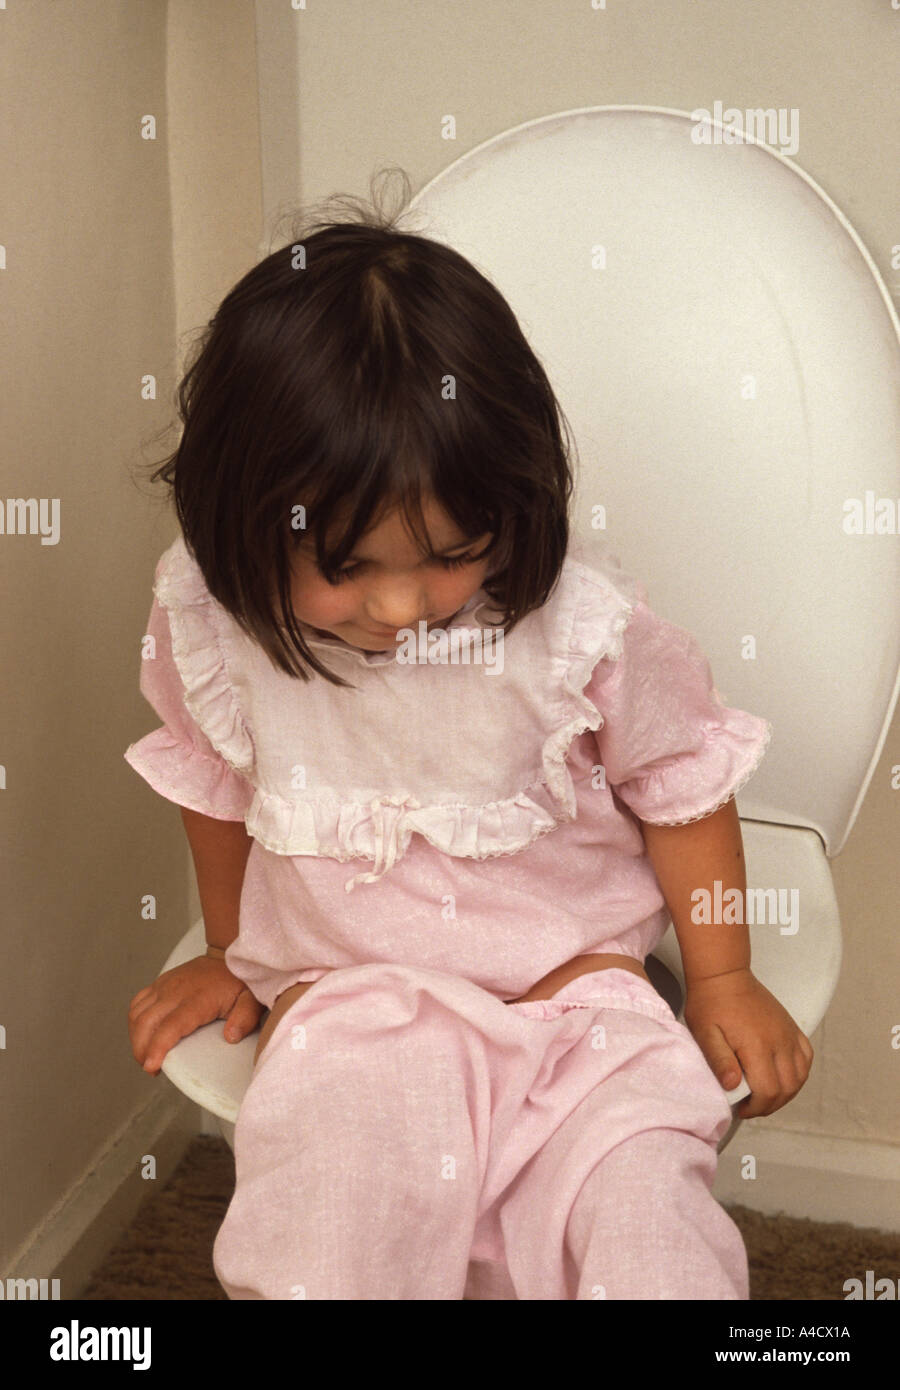 Little girl sitting on the toilet Stock Photo